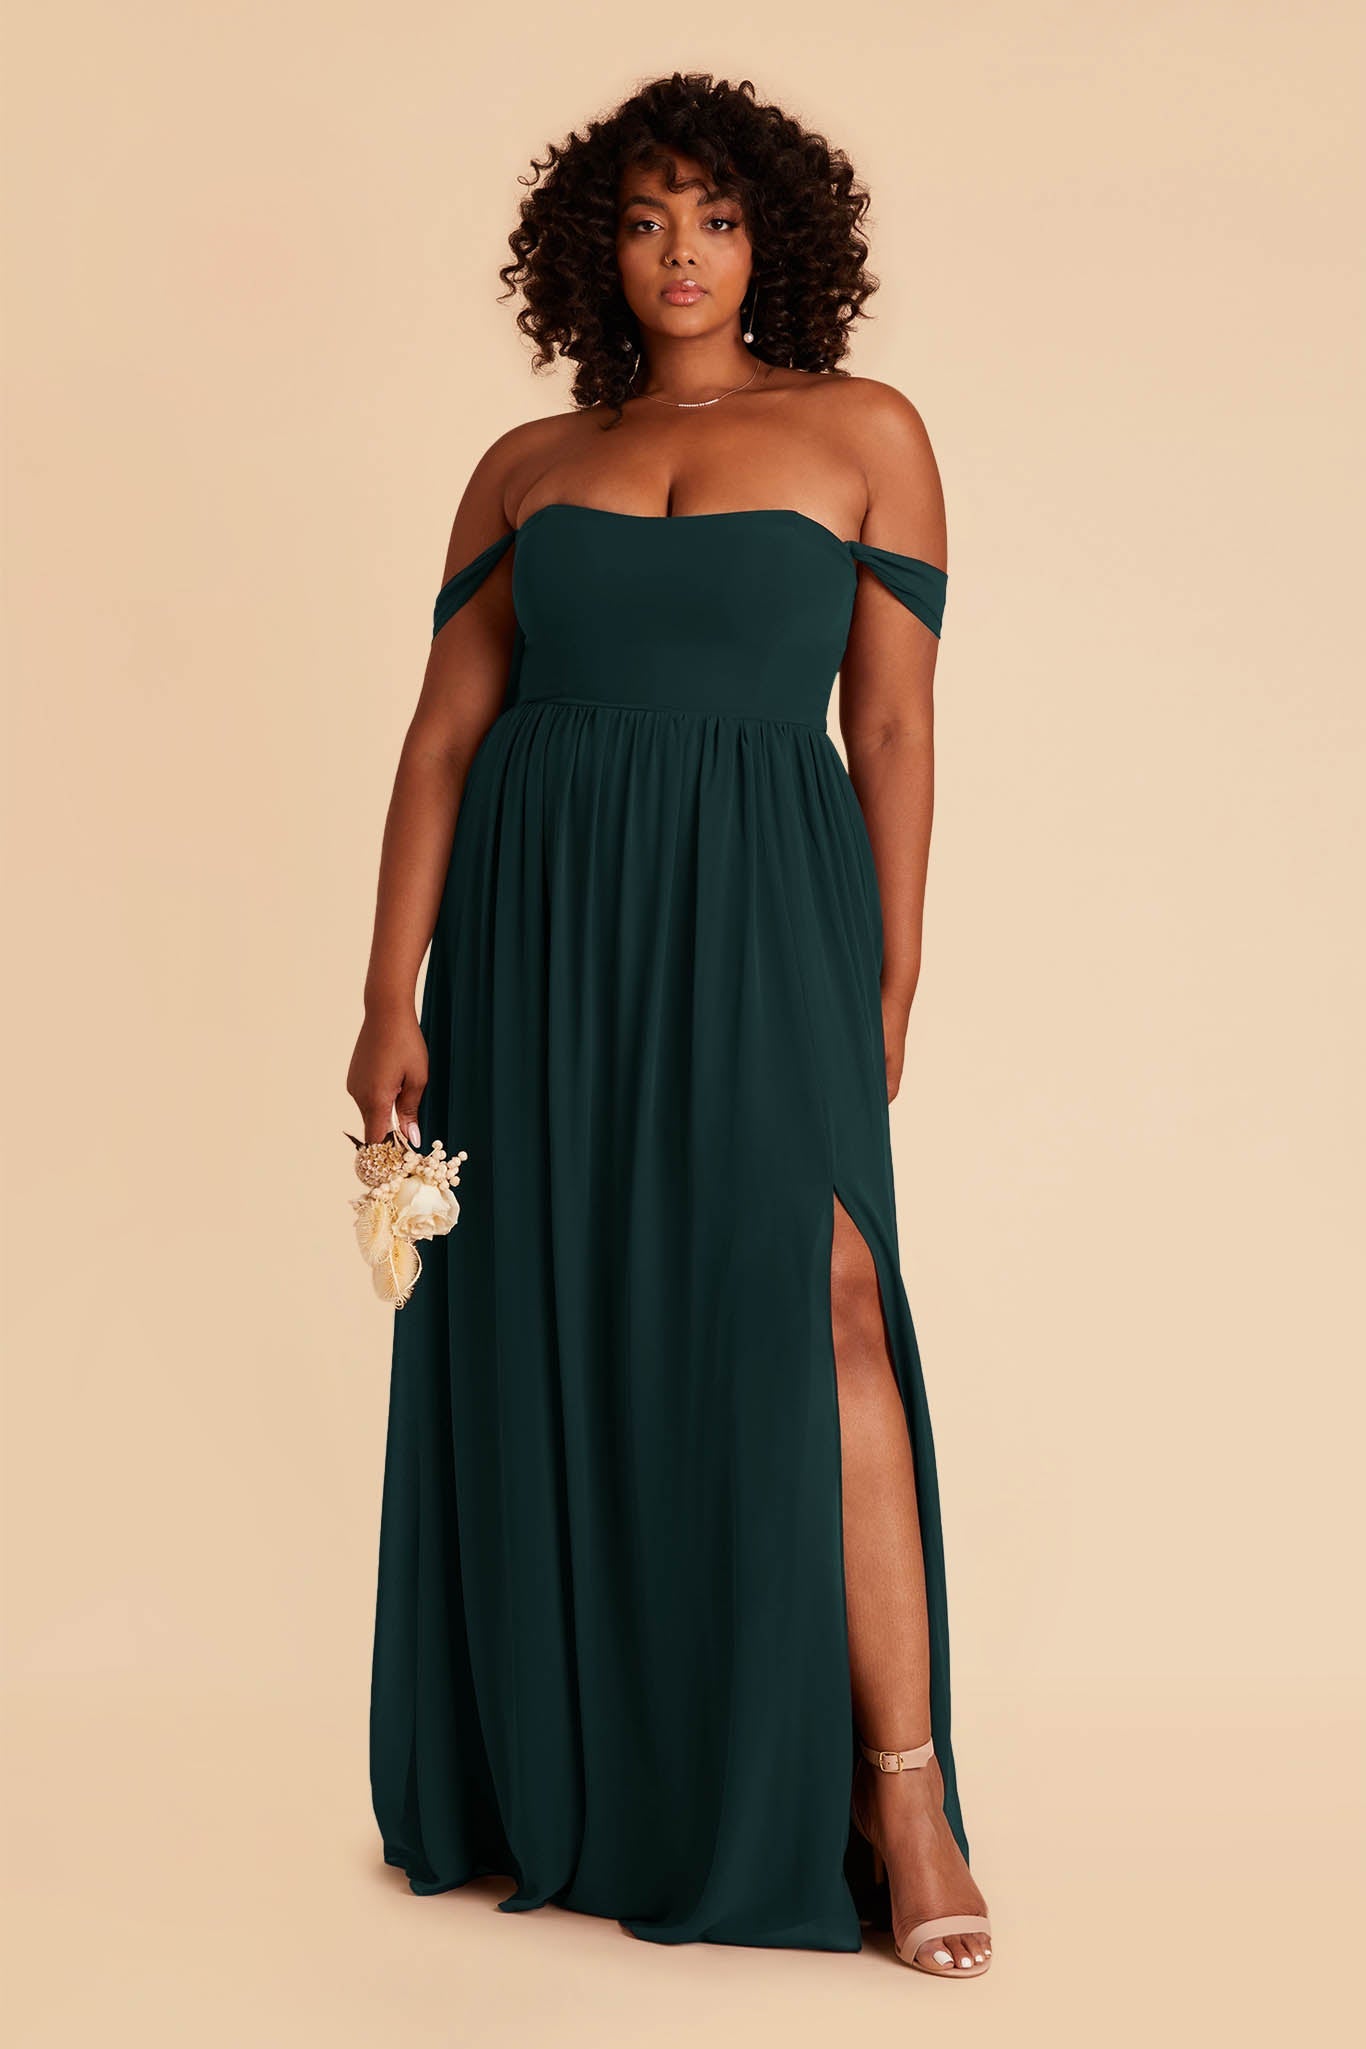 Emerald August Convertible Dress by Birdy Grey